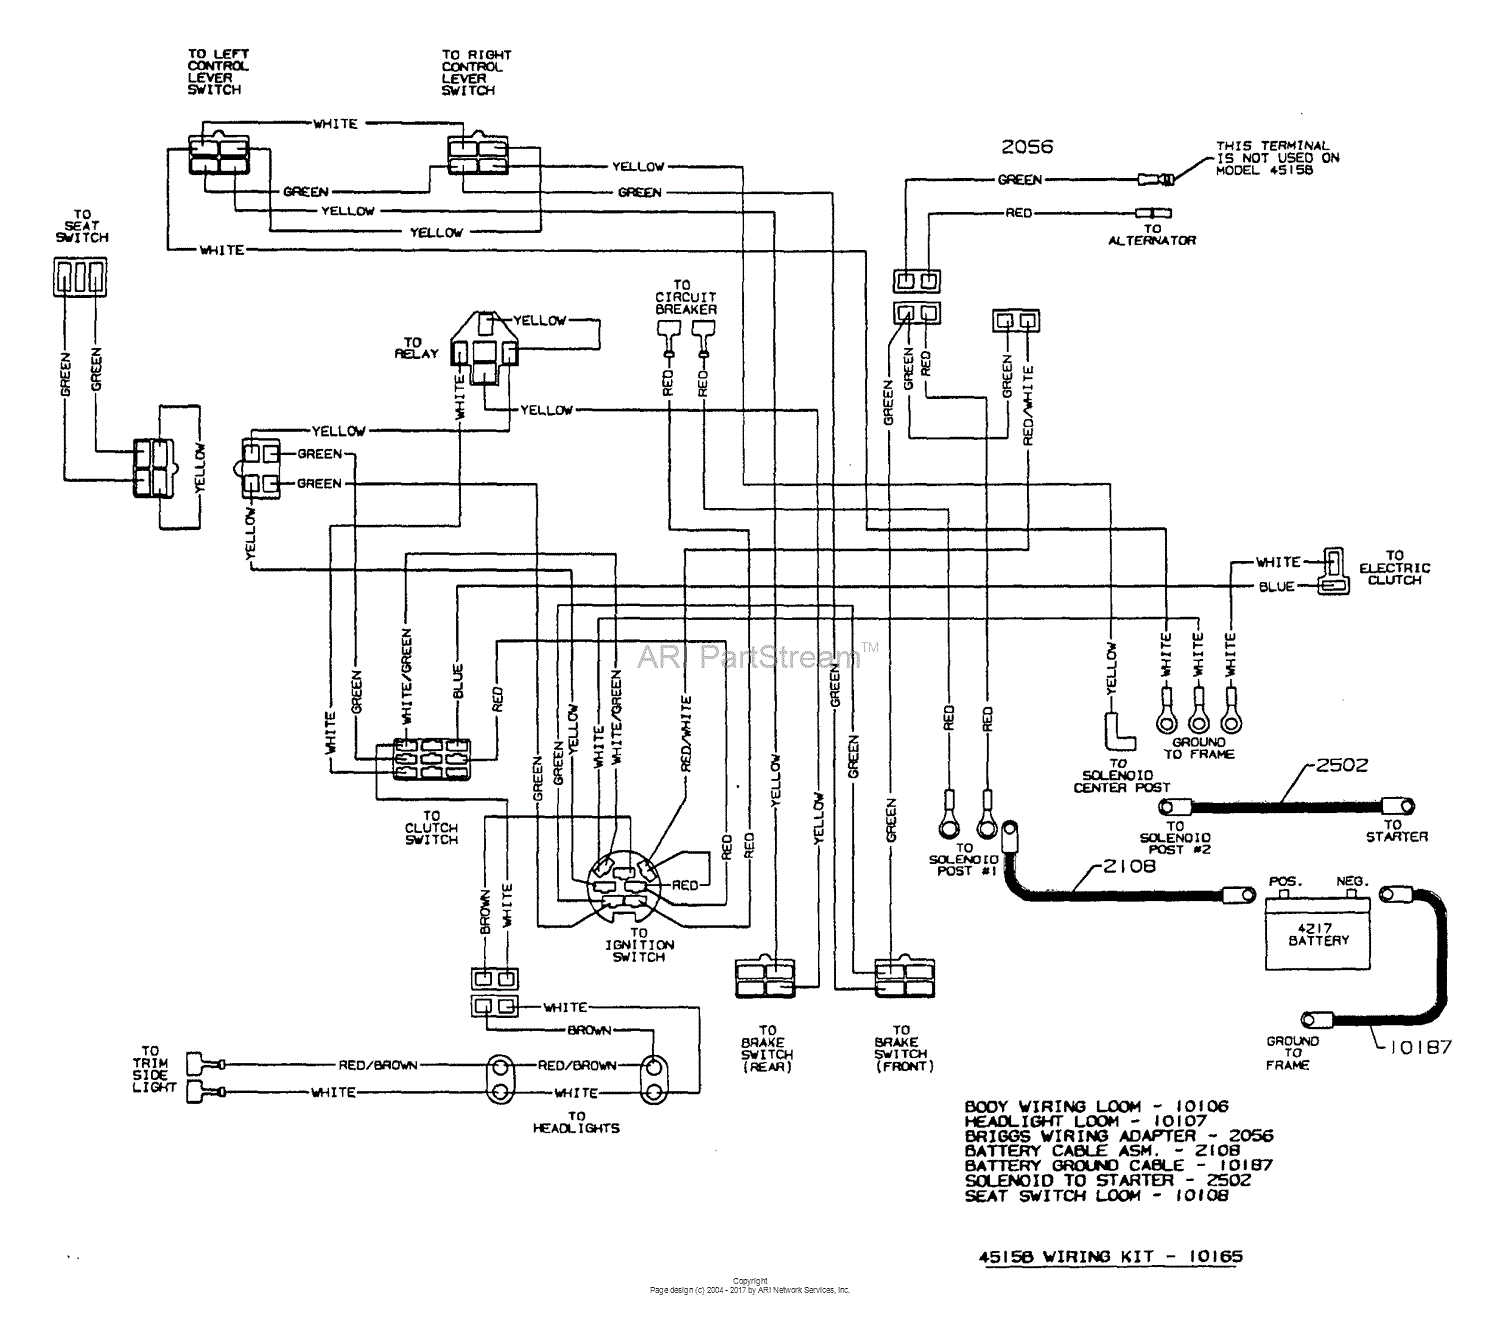 4515 spot light wiring diagram